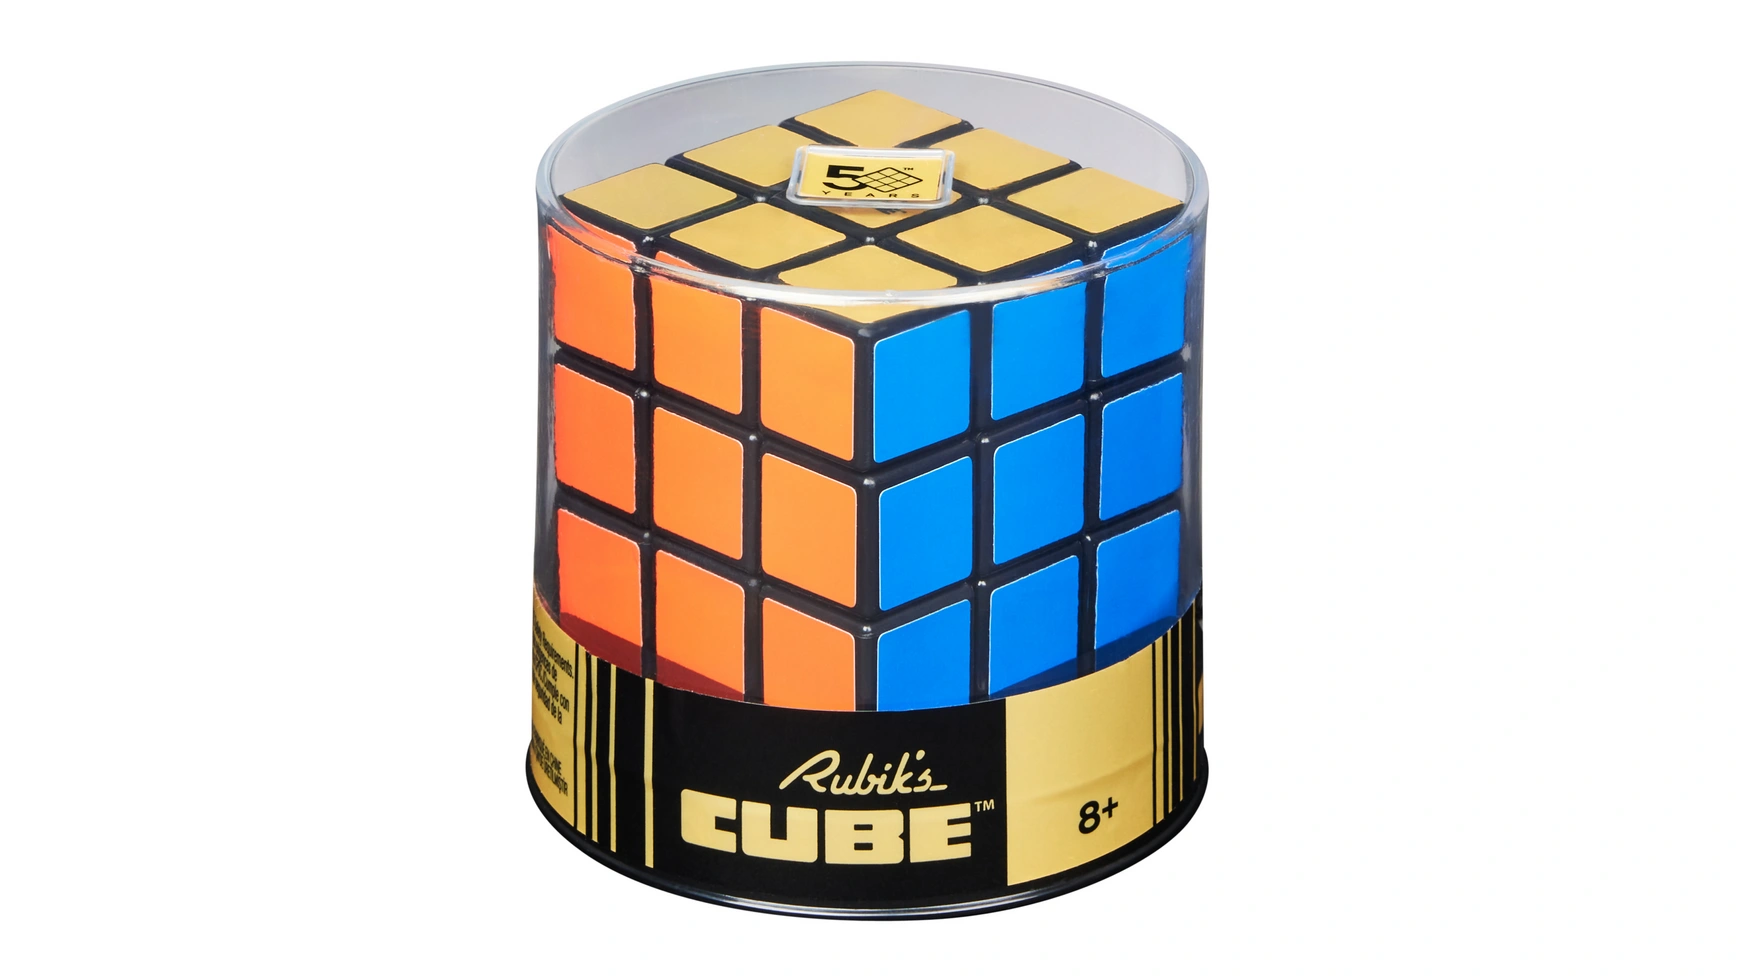 Ретро-кубик Рубика 3x3 Кубик Рубика кубик 3x3, внешний вид которого напоминает оригинал 50-летней давности Spin Master кубик магический 3x3 6x6 без наклеек